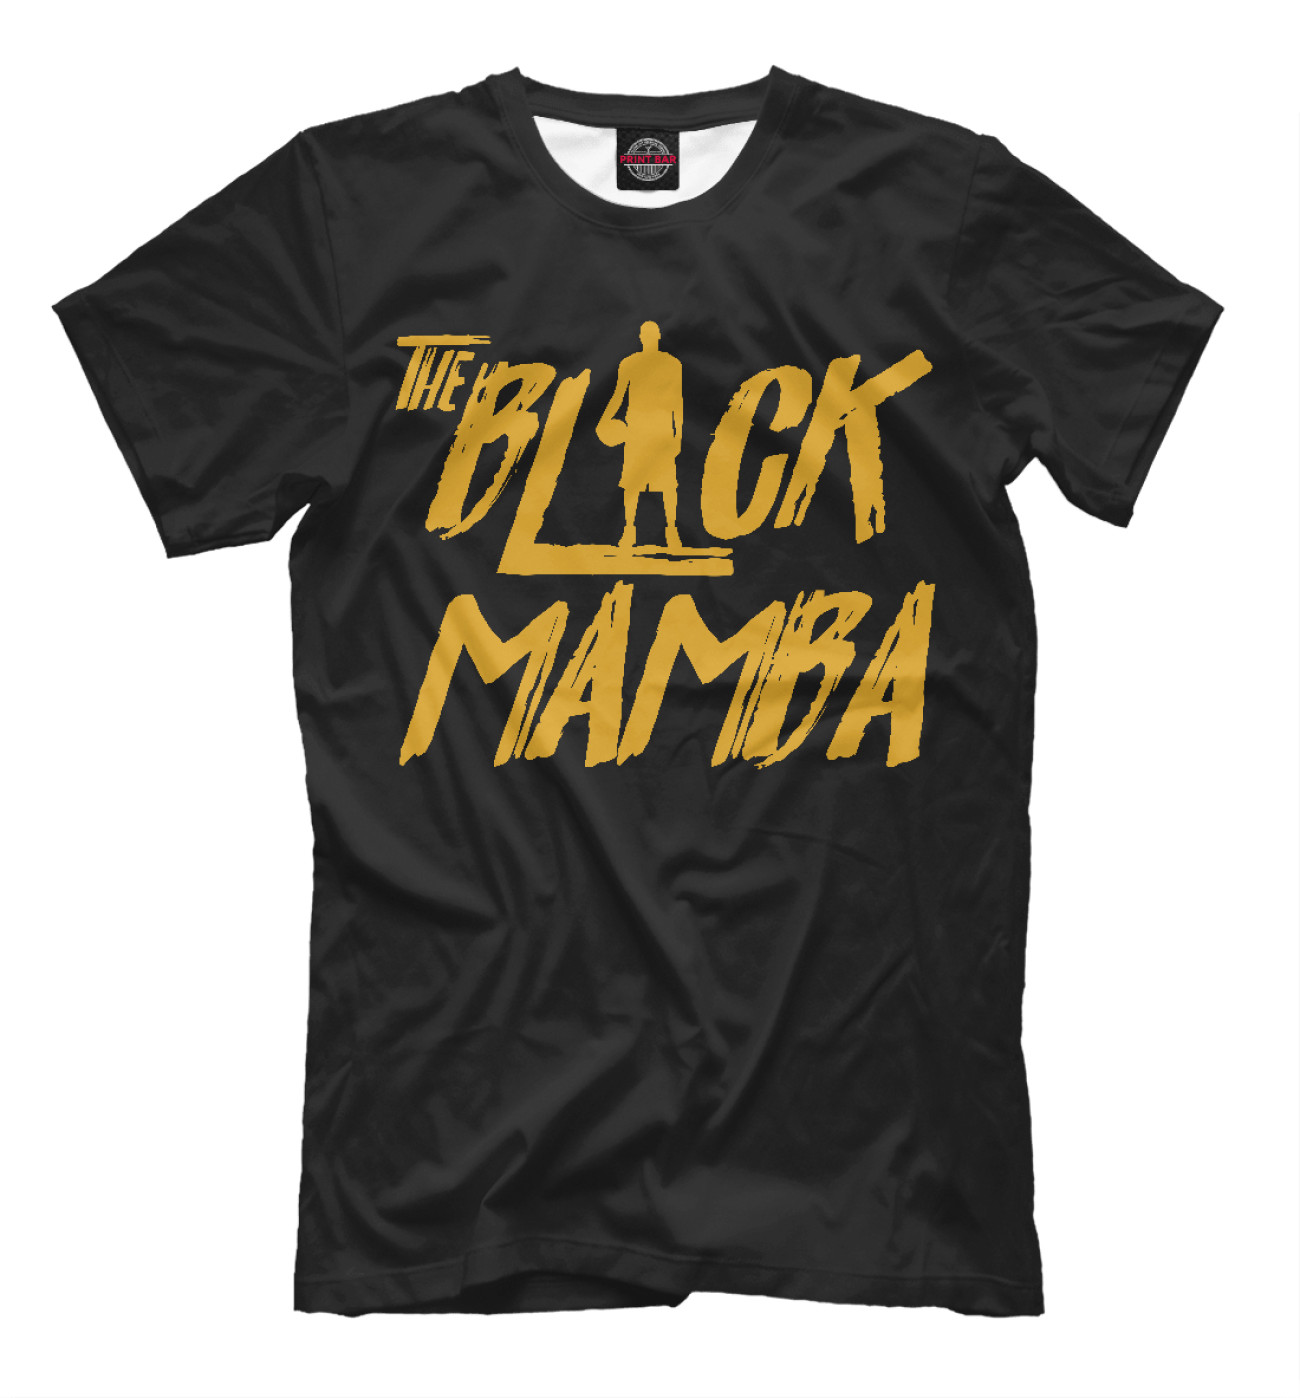 Мужская Футболка The Black Mamba, артикул: NBA-997562-fut-2